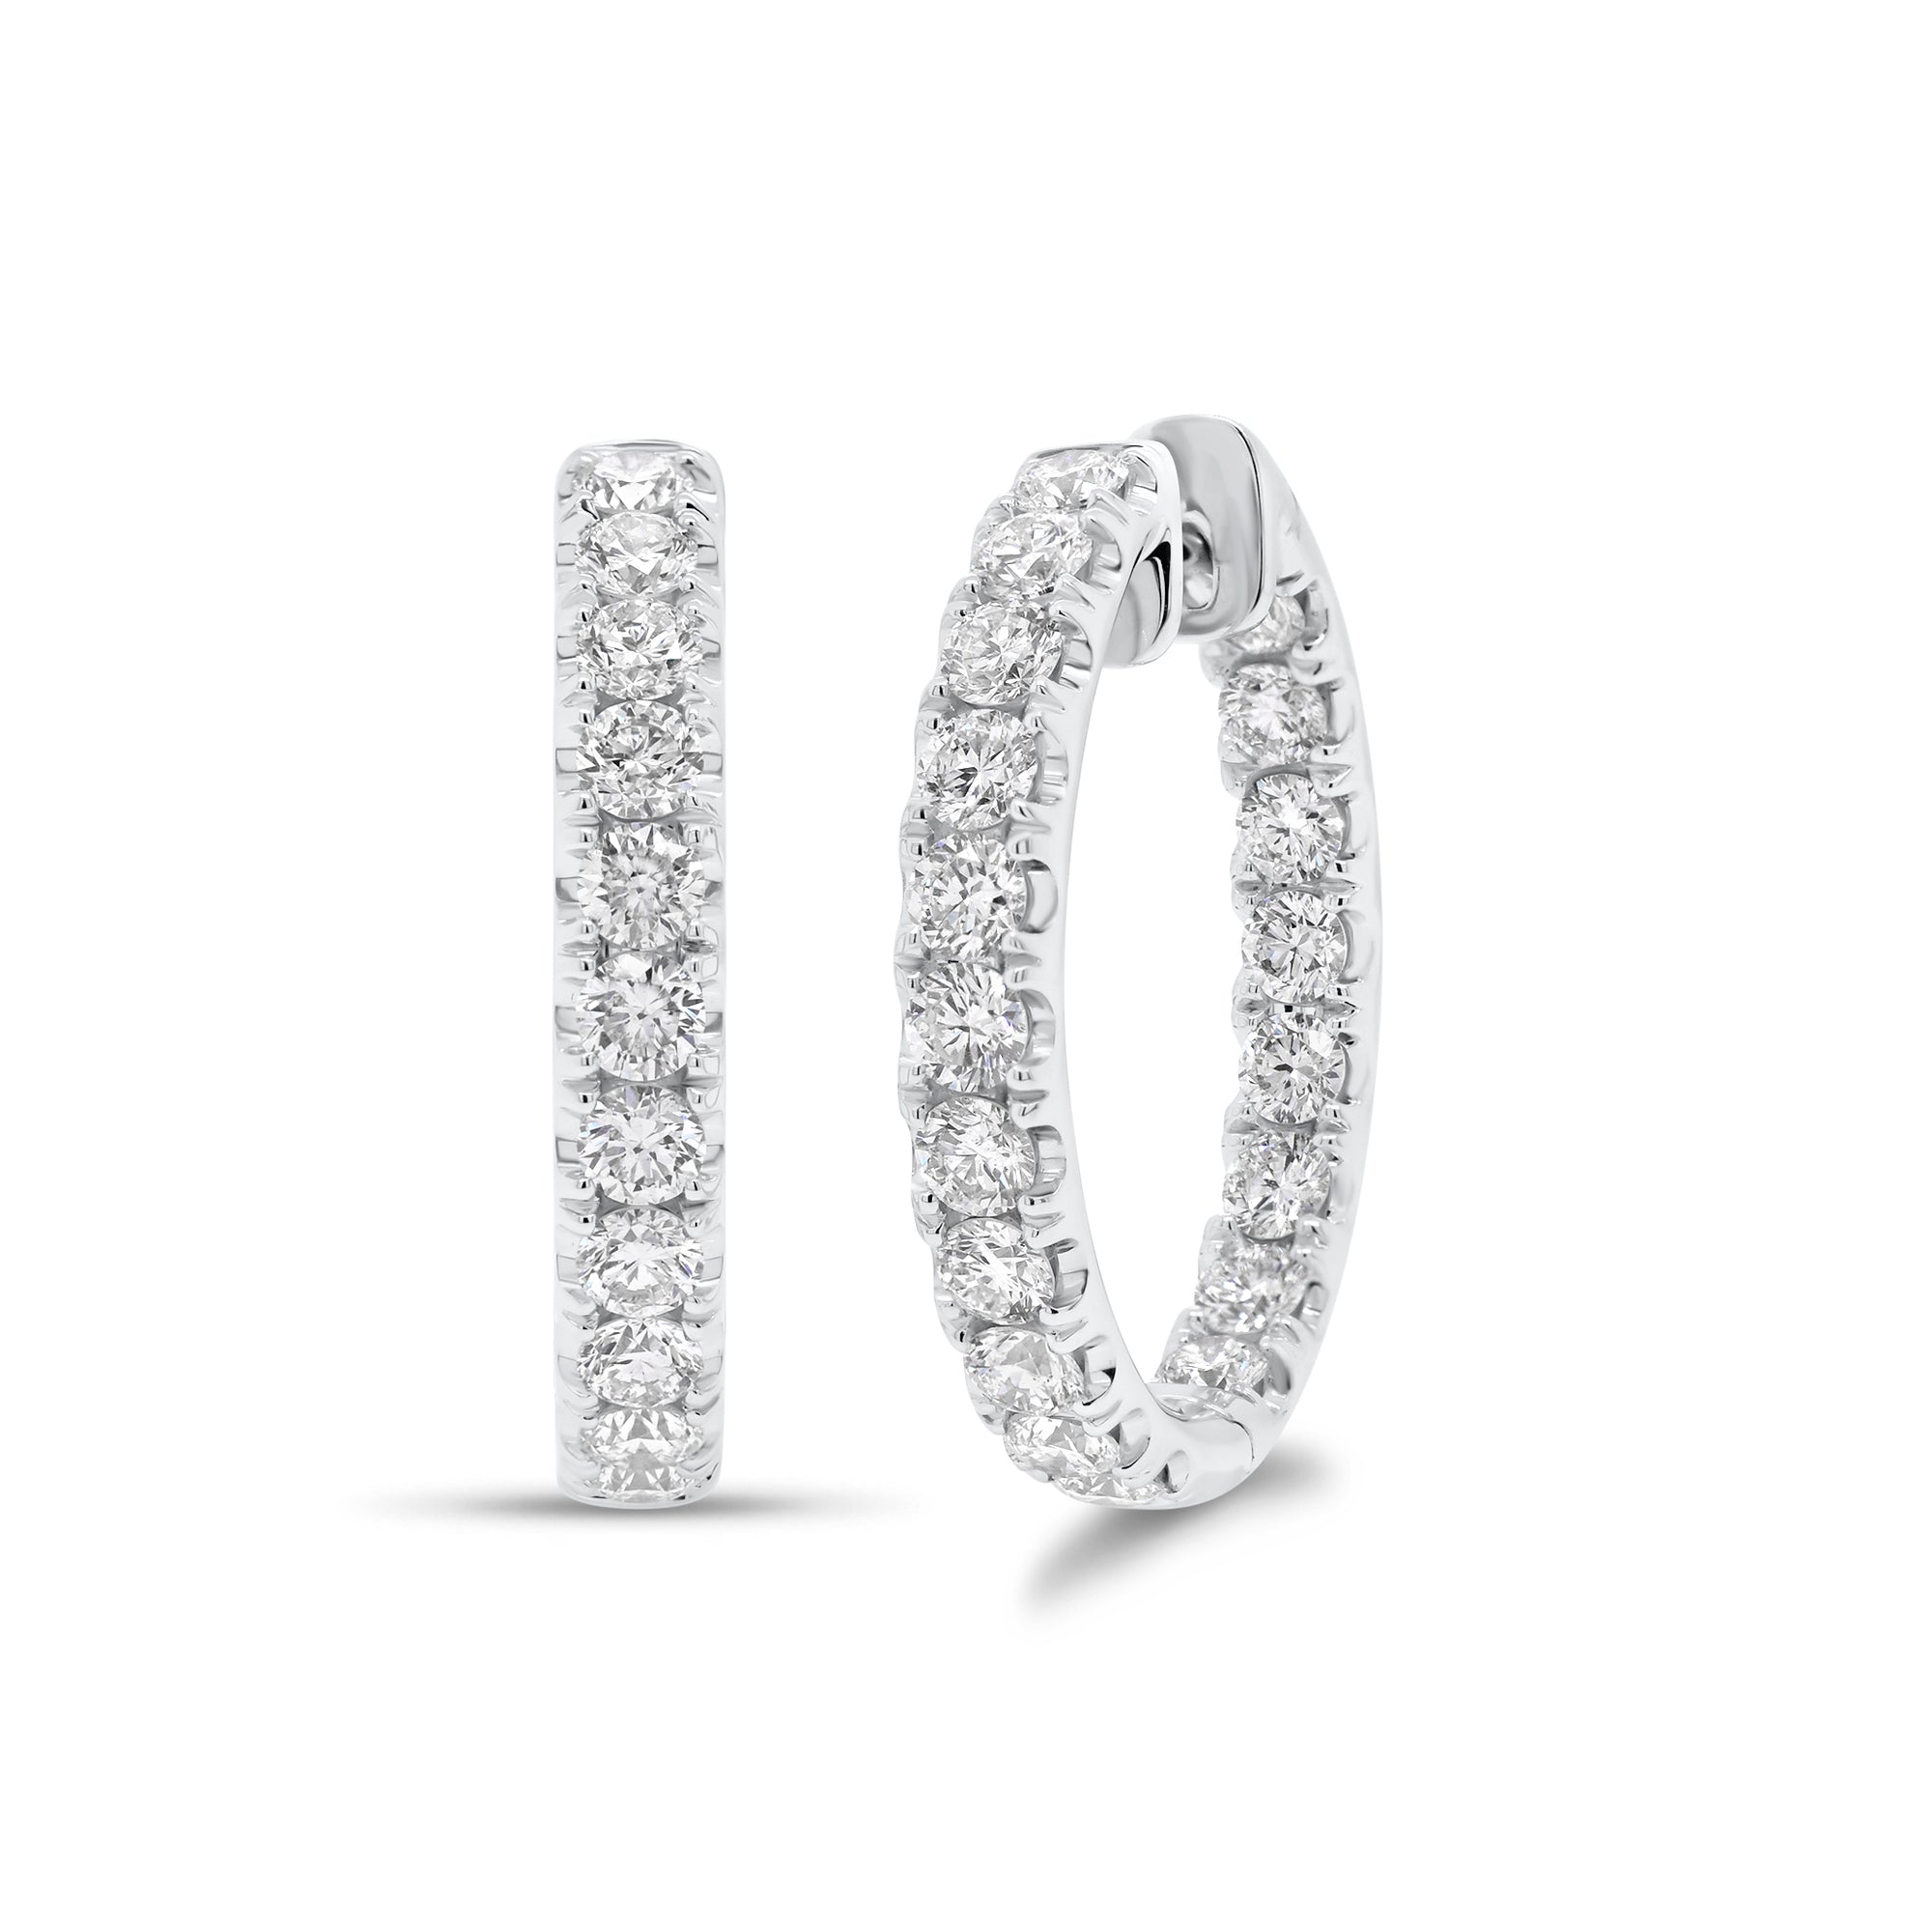 3 ct diamond interior & exterior hoop earrings - 18K gold weighing 9.50 grams  - 38 round diamonds totaling 3.06 carats